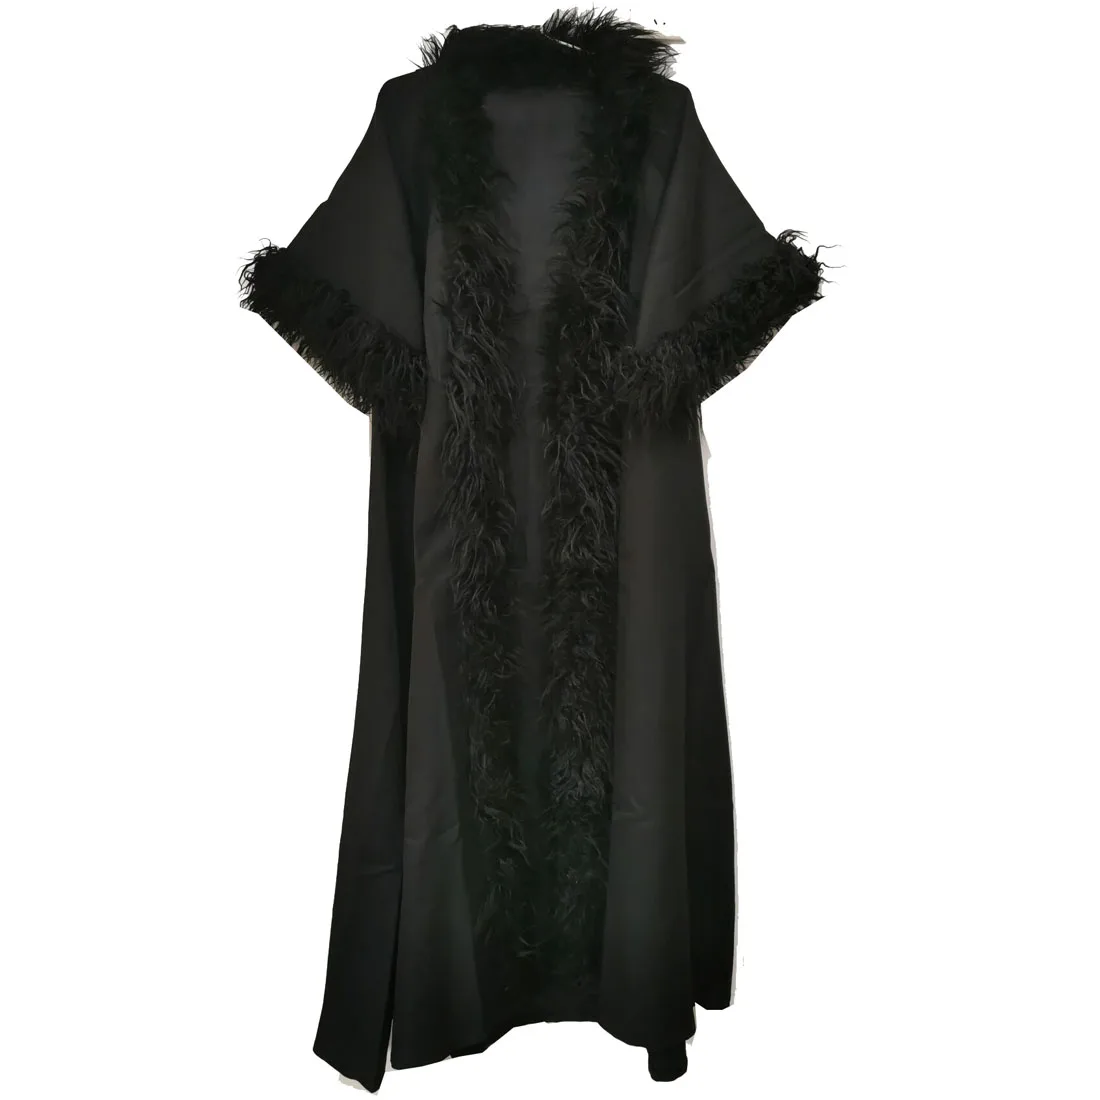 2021 Cosplay Cloak Diana Prince Costume Black Cape Halloween Costume ...